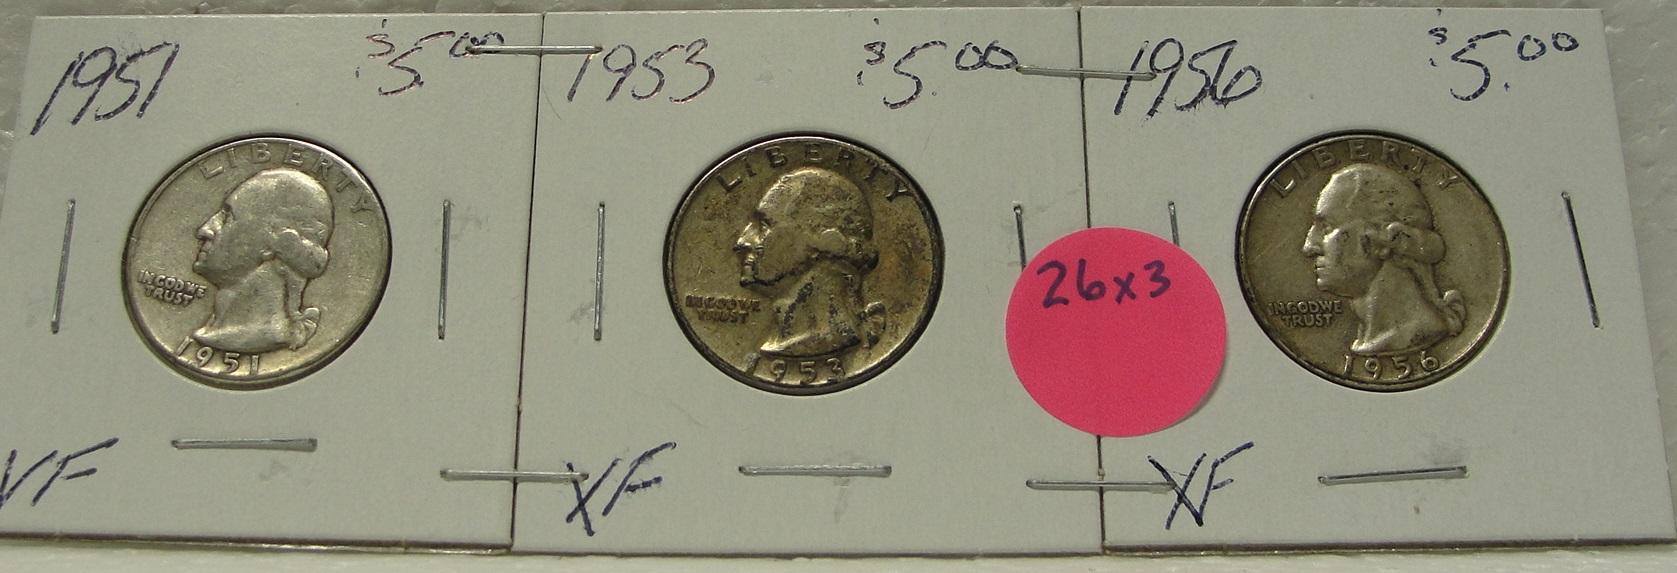 1951, 1953, 1956 SILVER WASHINGTON QUARTERS - 3 TIMES MONEY